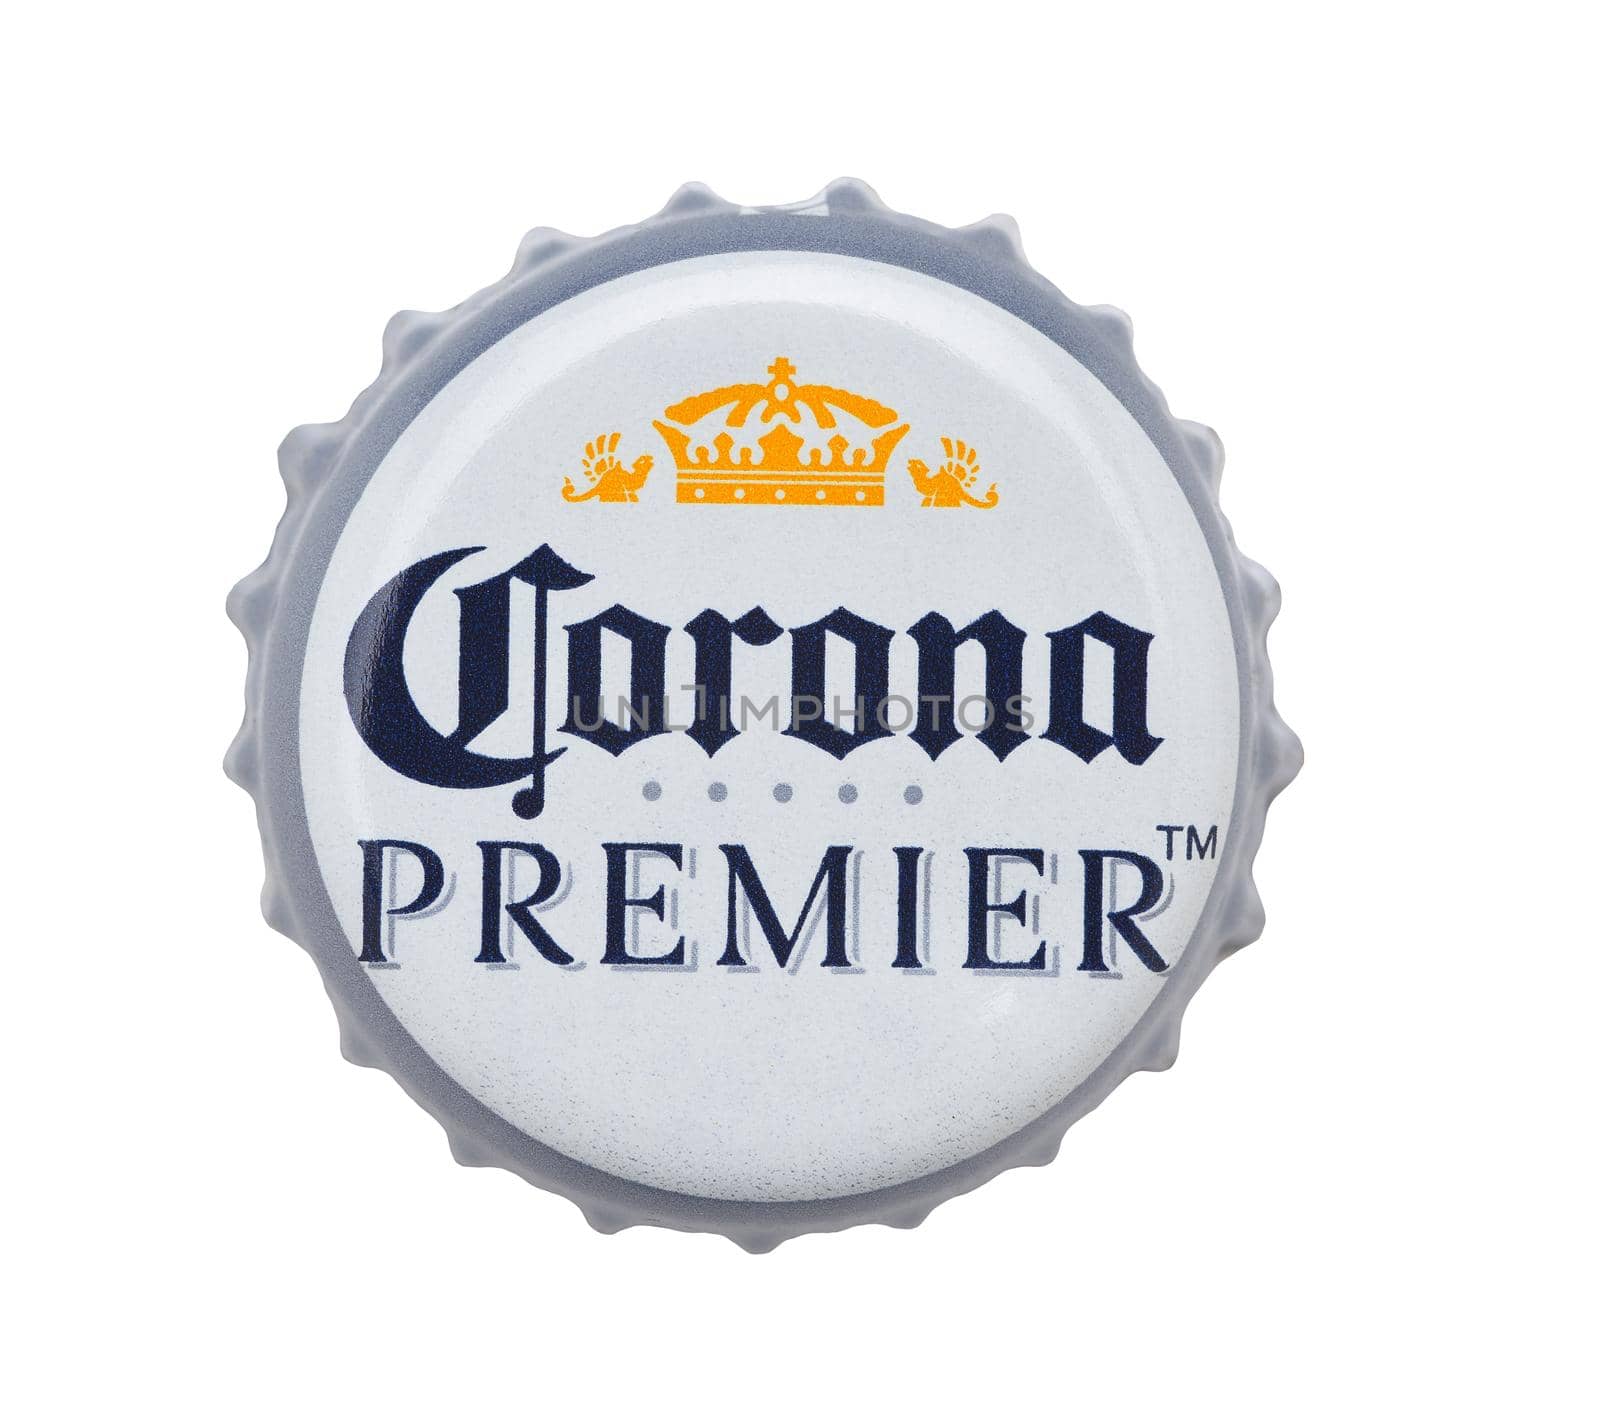 IRVINE, CALIFORNIA - 4 JUNE 2020: Closeup of a Corona Premier beer bottle cap on white.